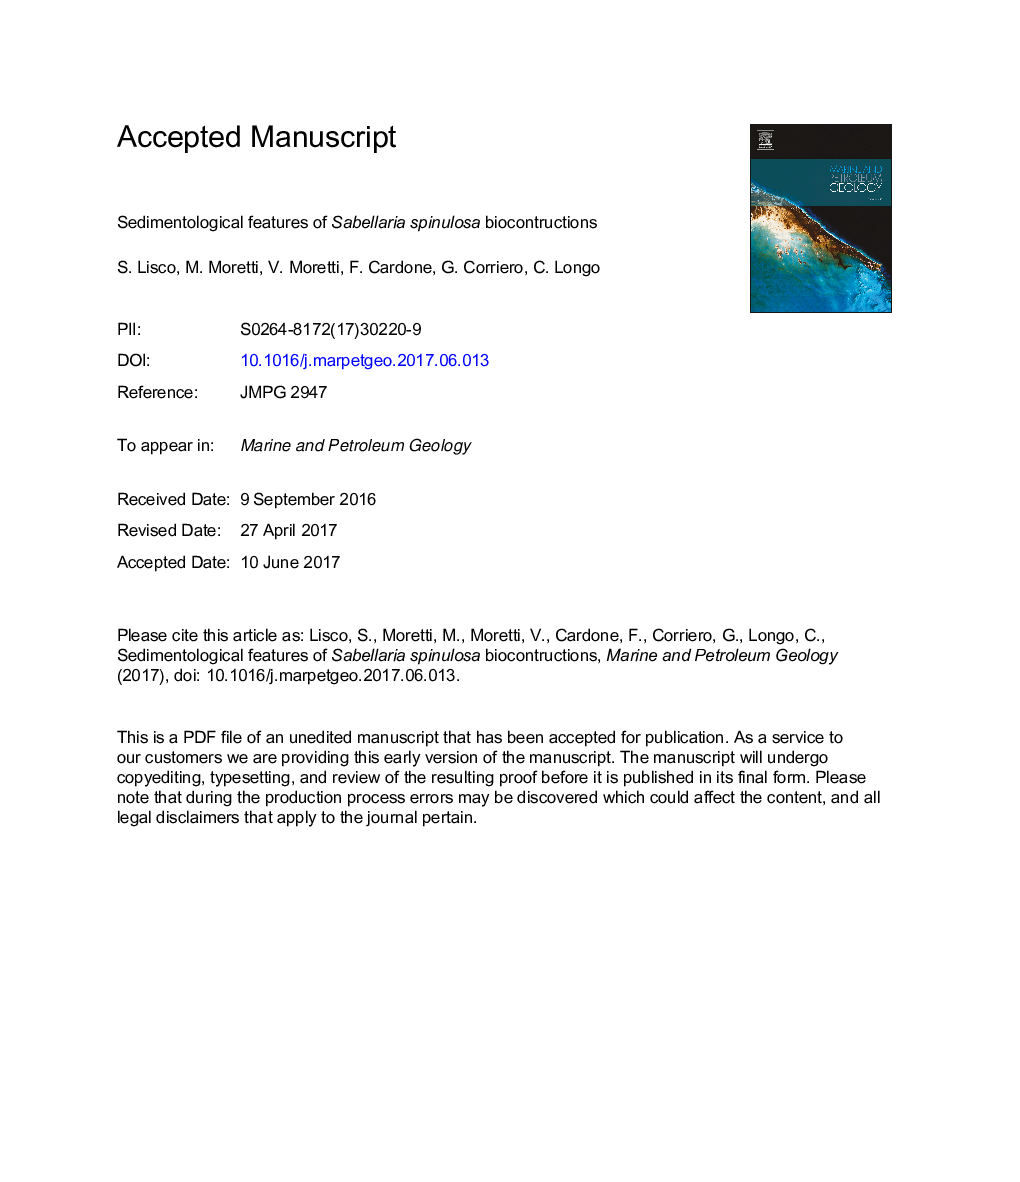 Sedimentological features of Sabellaria spinulosa biocontructions